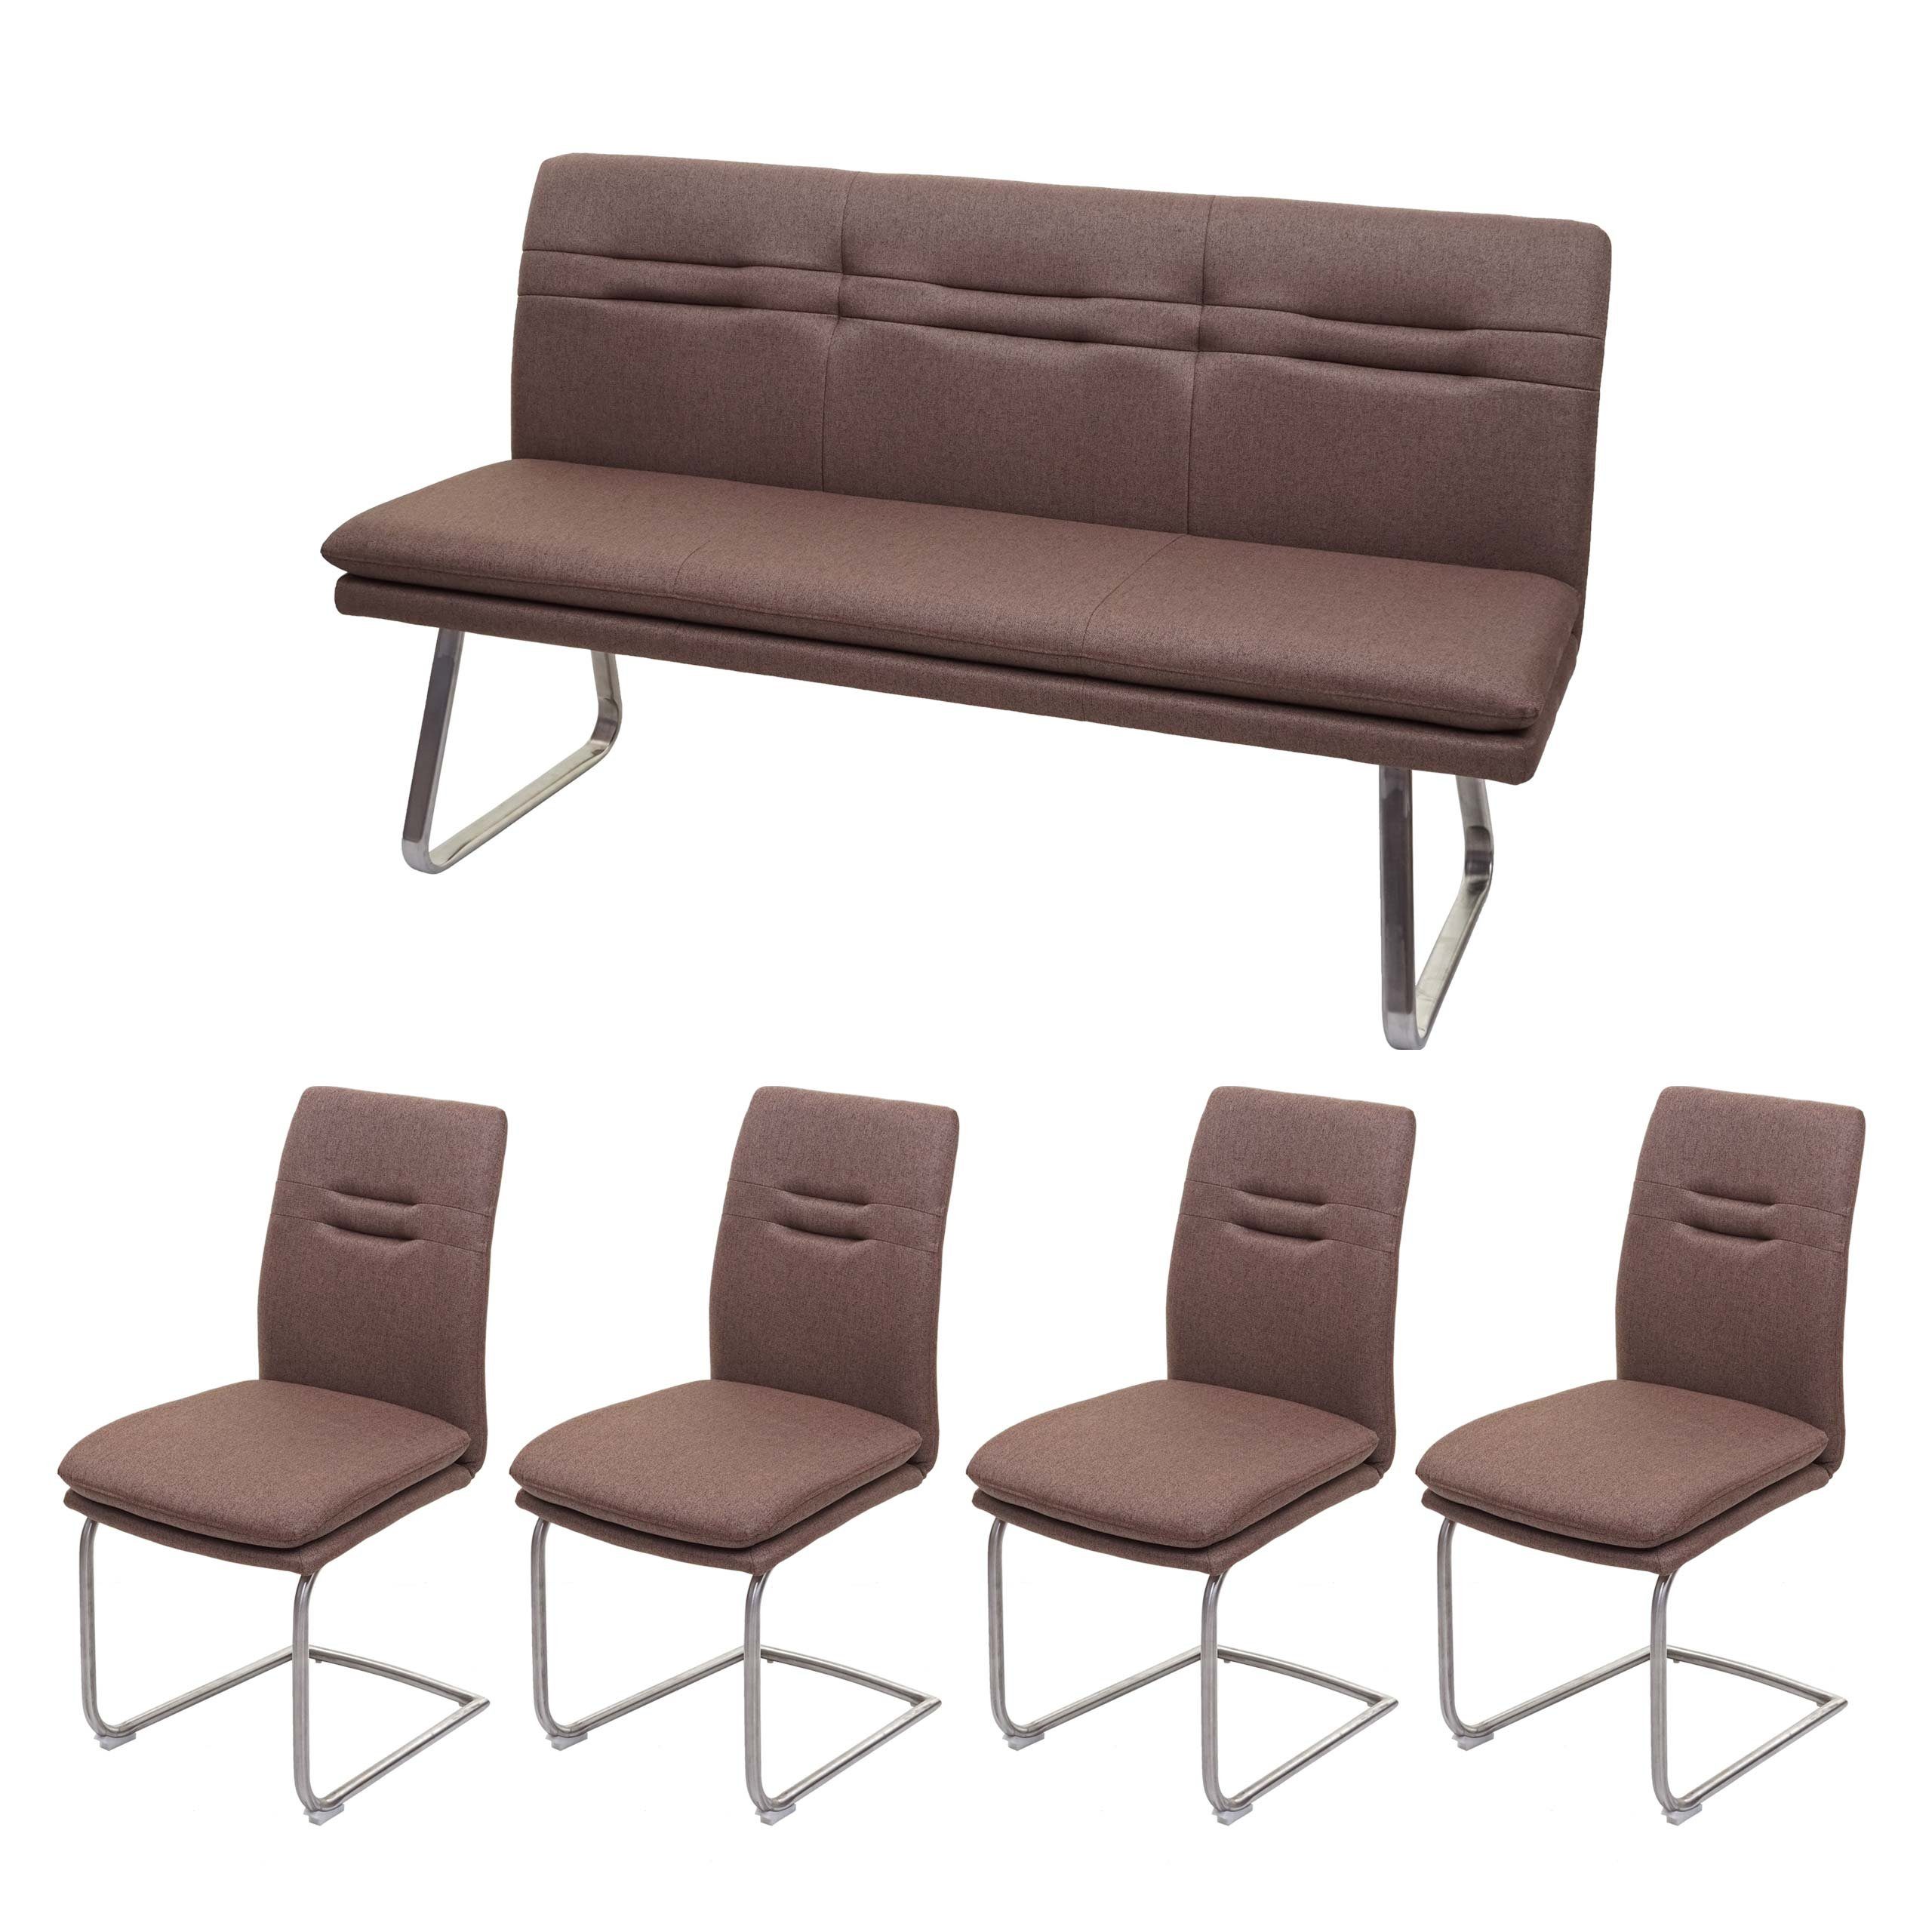 MCW Essgruppe MCW-H70-B, (Set, 5-tlg., 4 Stühle, 1 Tisch, 1 Bank), Bequeme Formgebung, Stabiles Gestell braun